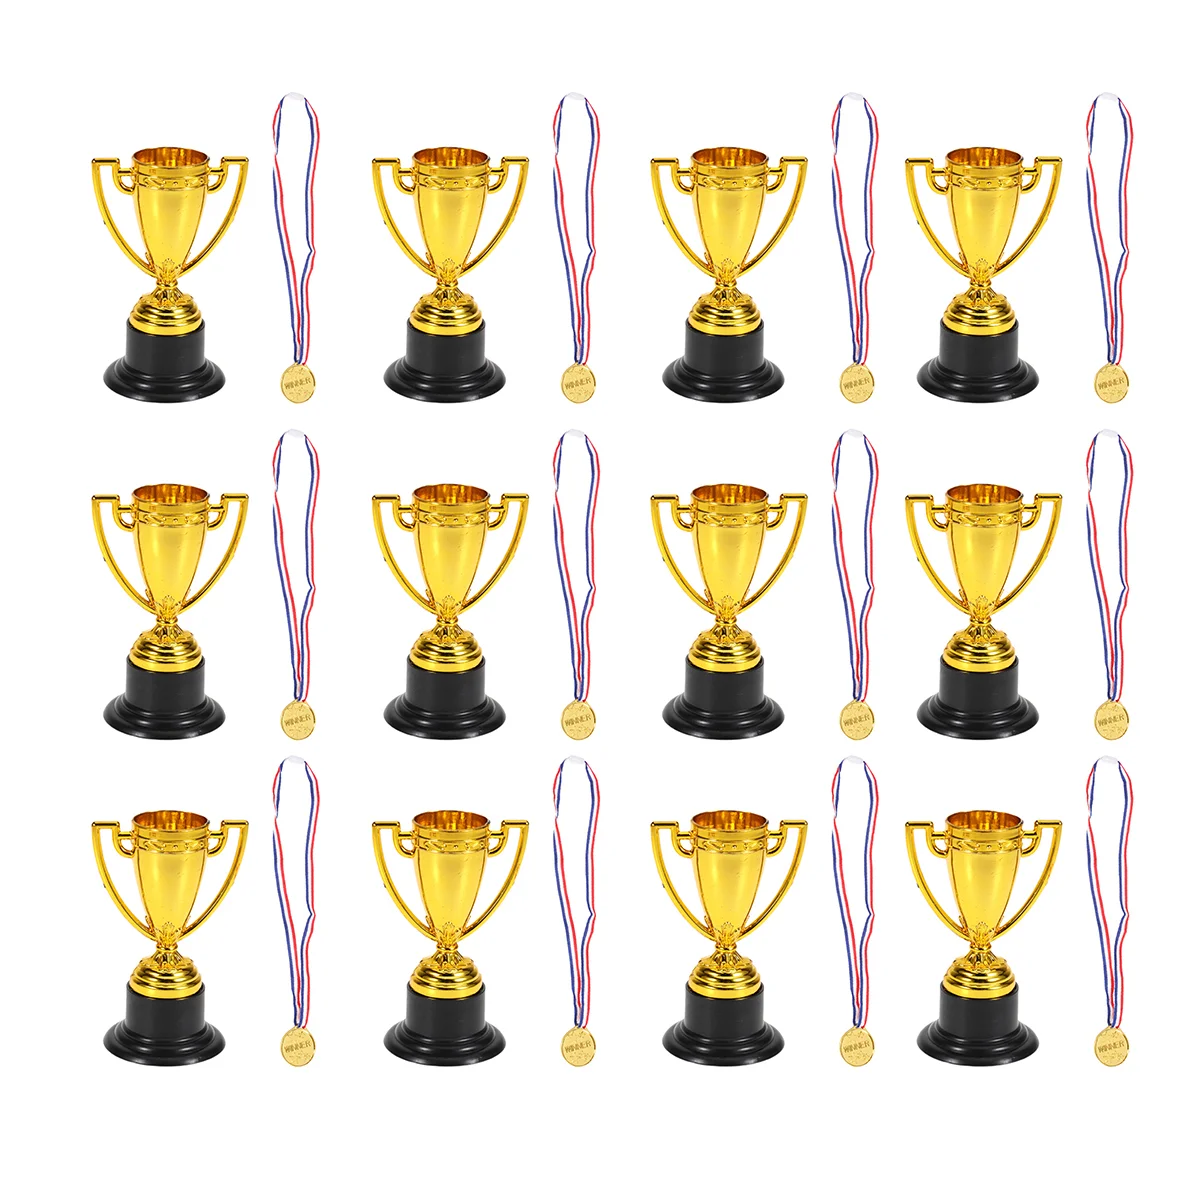 

32/28pcs Mini Gold Cups Reward Prizes Kids Small Medals Kids Gift Awards Trophy Golden (16/14pcs Trophies+16/14pcs Medals)